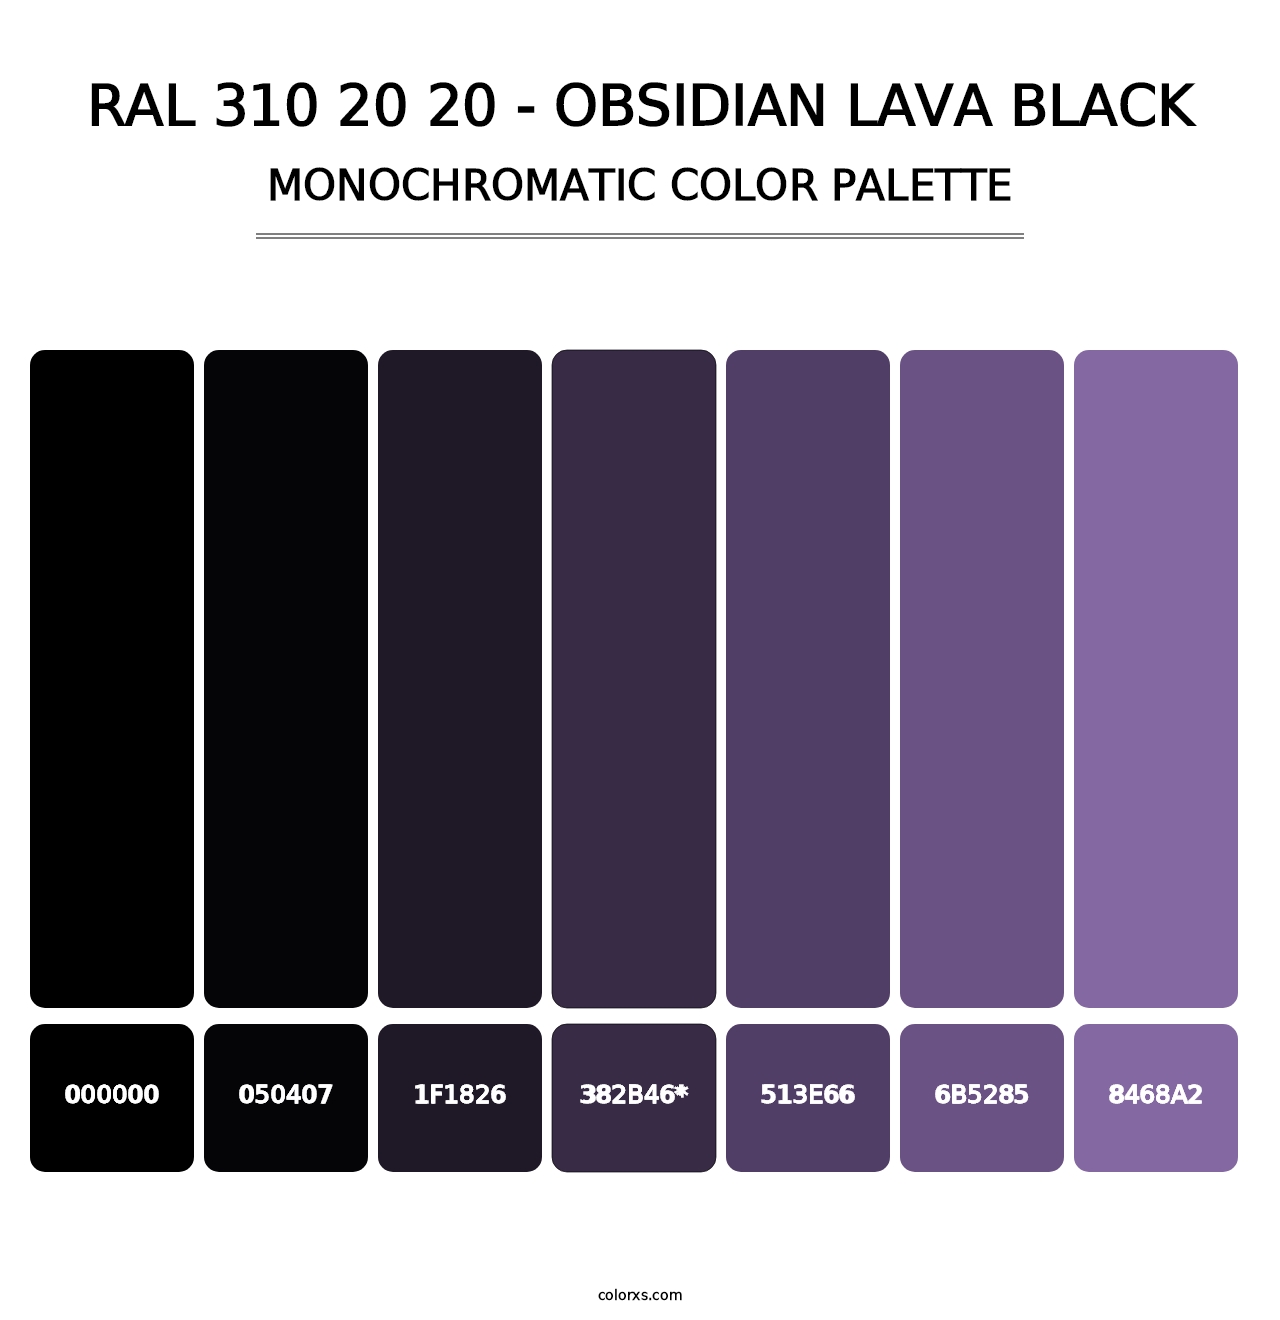 RAL 310 20 20 - Obsidian Lava Black - Monochromatic Color Palette